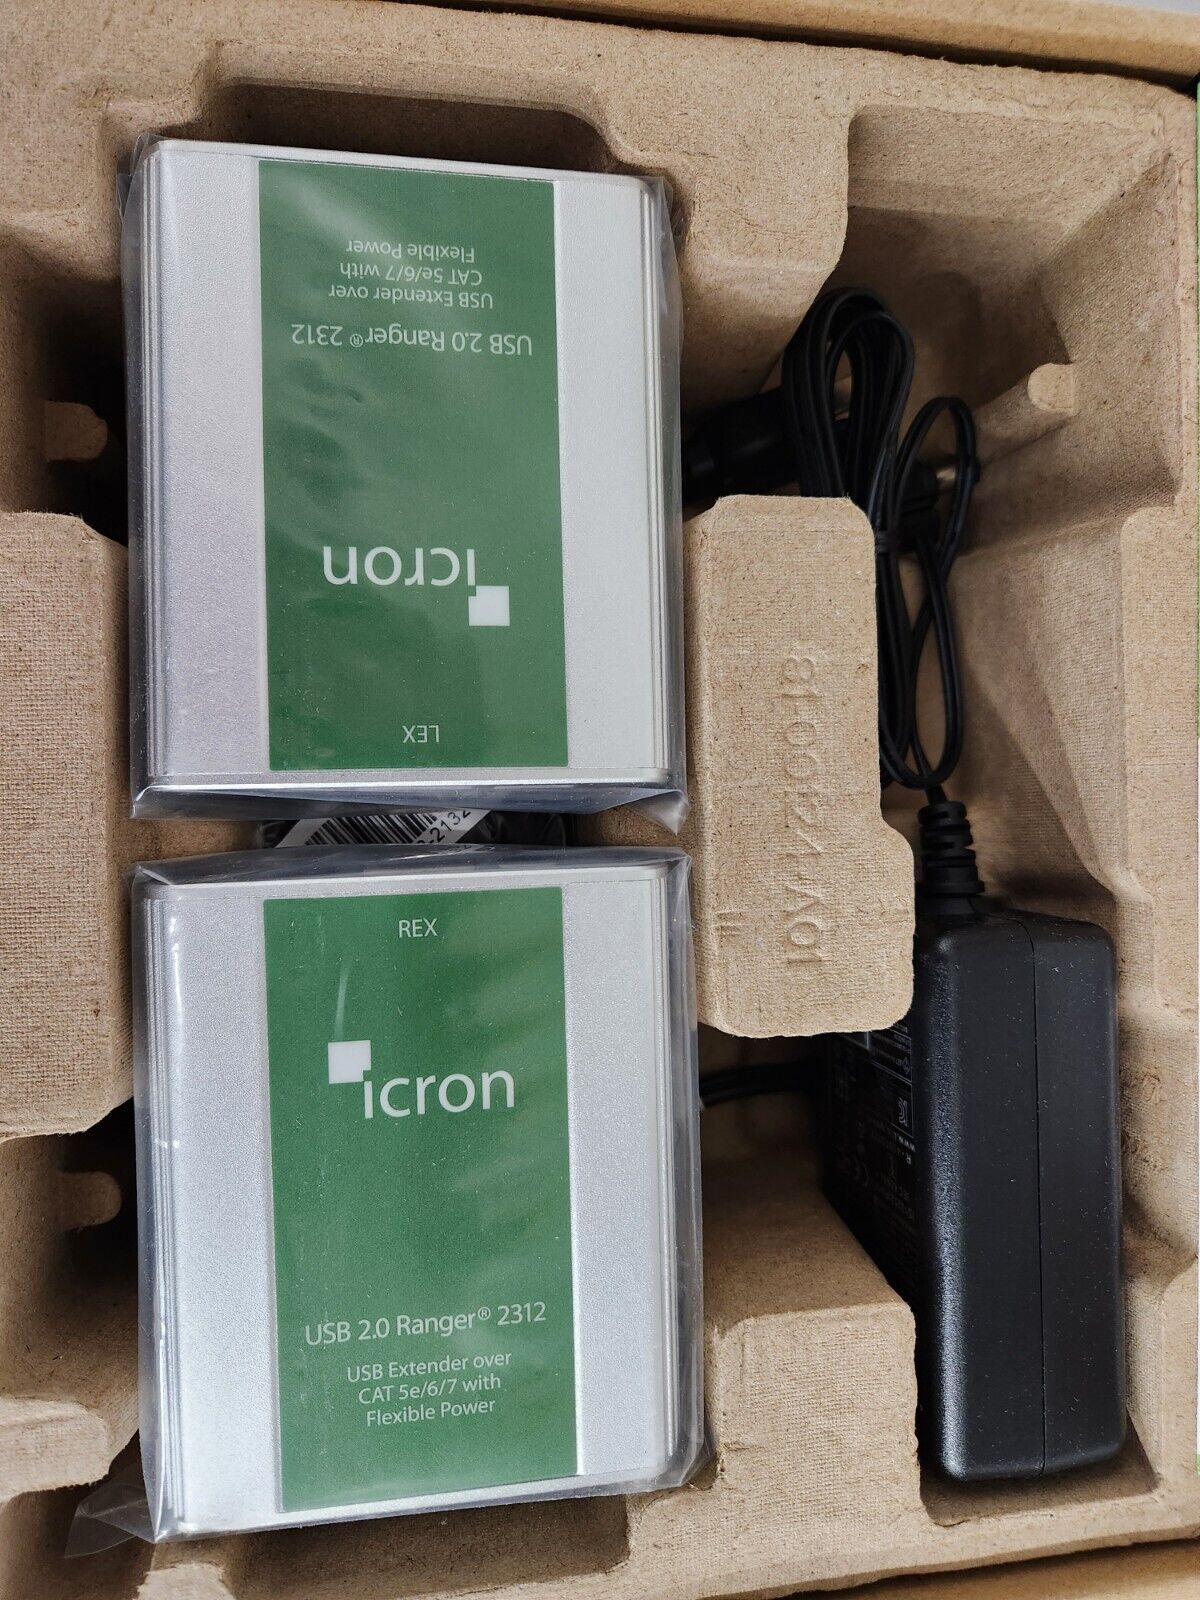 Icron Two-Port USB 2.0 Ranger 2312 CAT 5e/6/7 Extender System NEW